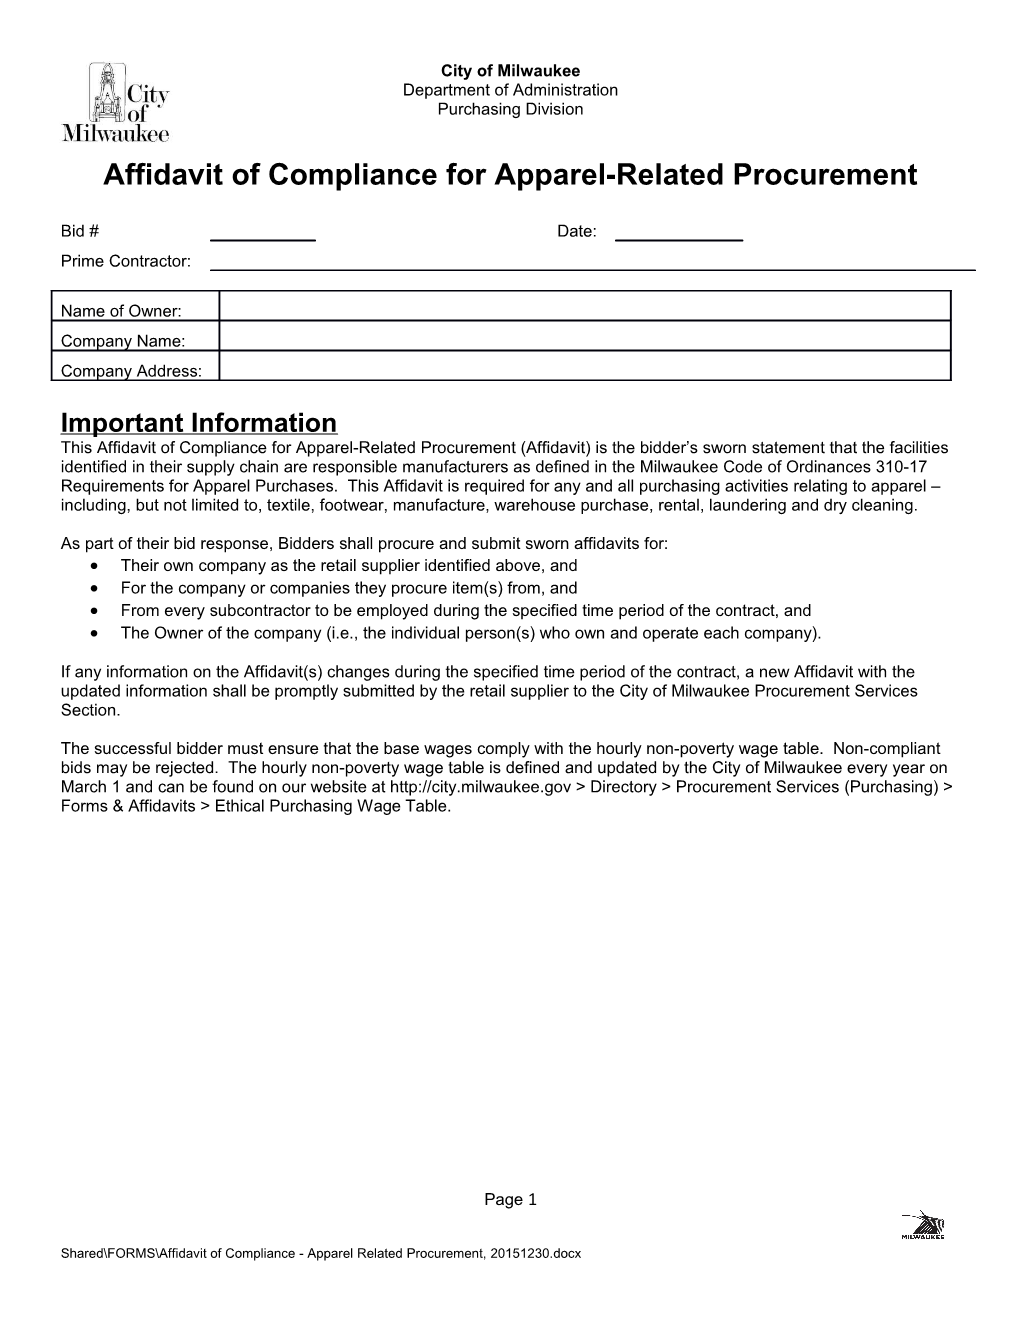 Affidavit of Compliance for Apparel-Related Procurement